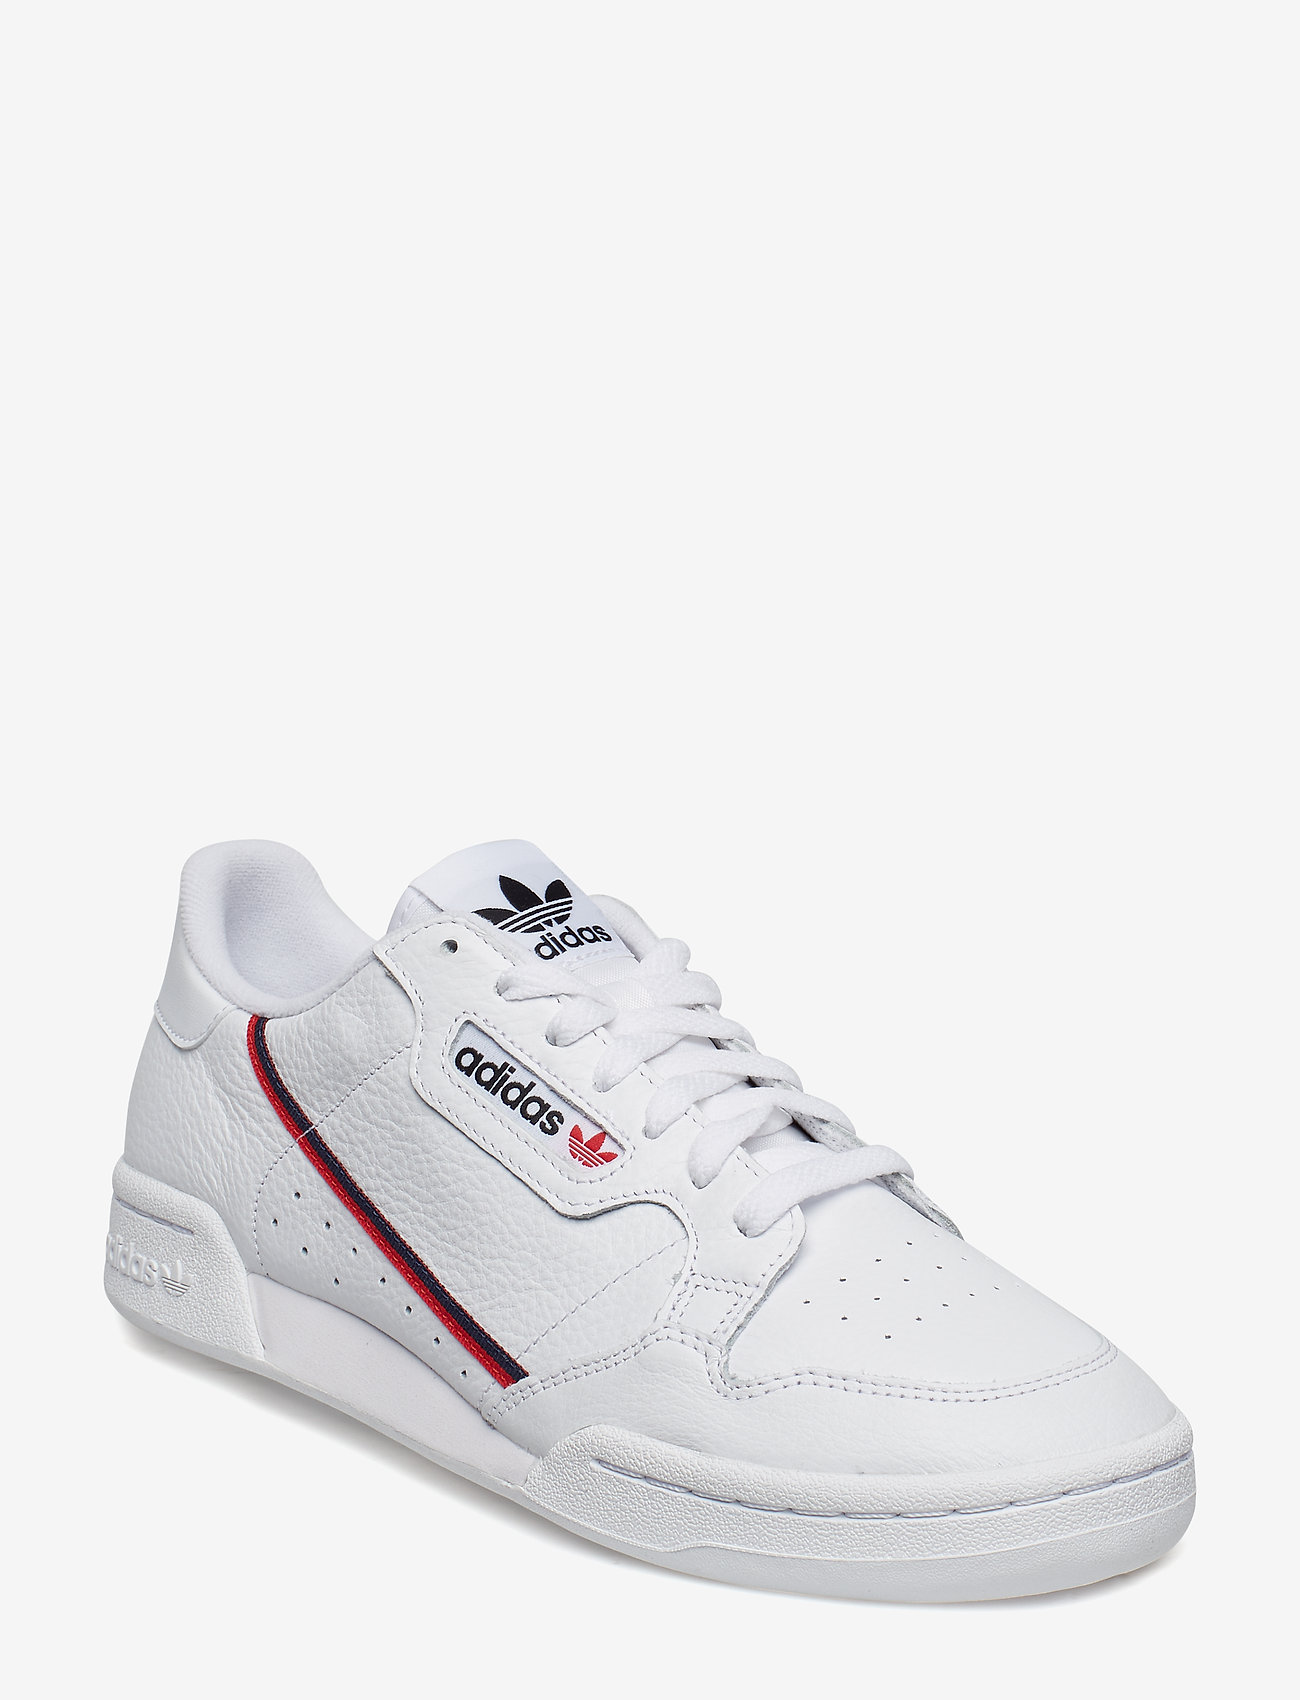 adidas Originals - Continental 80 Shoes - lage sneakers - ftwwht/scarle/conavy - 0